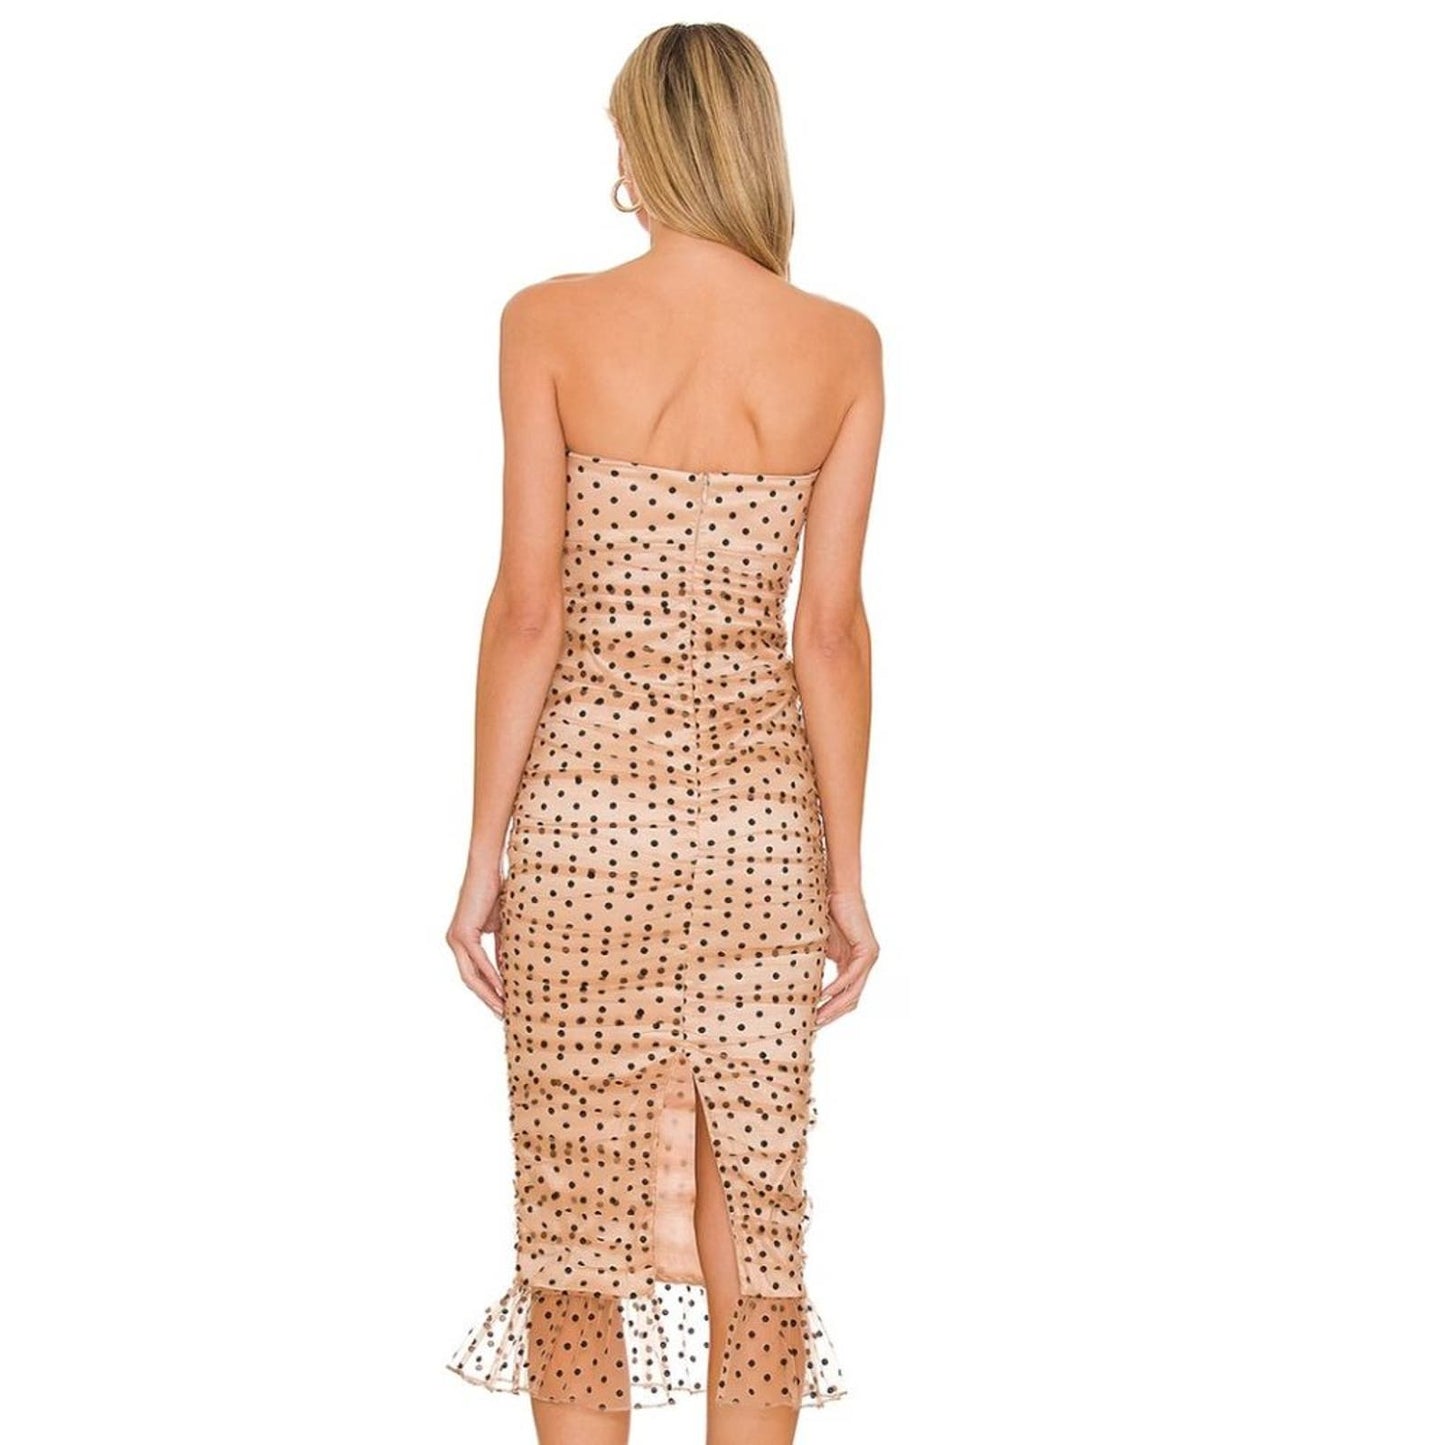 Majorelle Eloise Midi Dress in Dark Nude NWOT Size Small